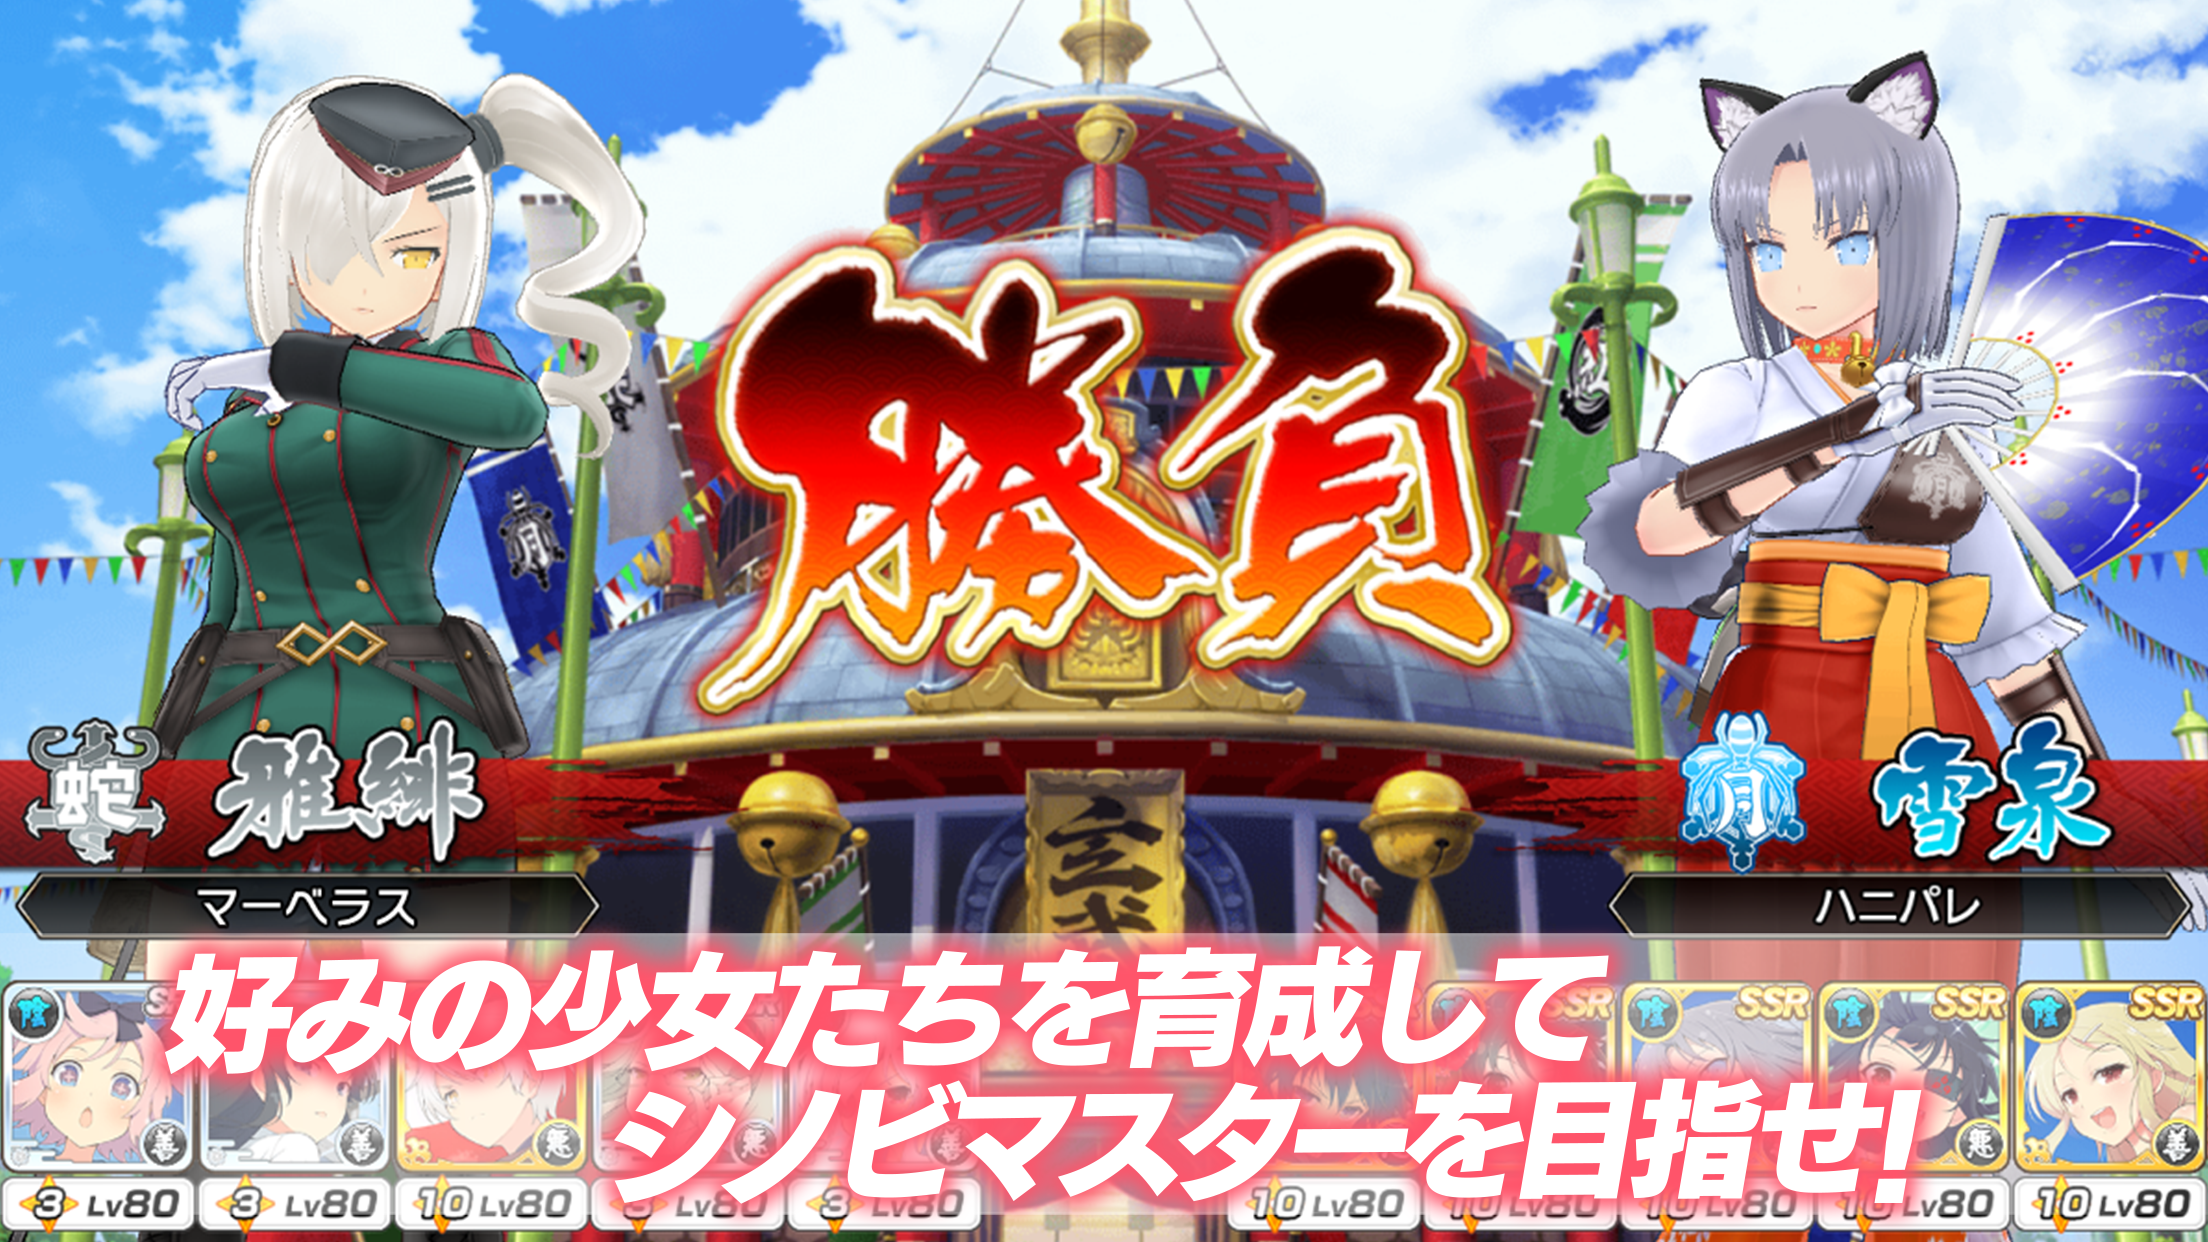 Shinobi Master Senran Kagura: New Link announced for iOS, Android